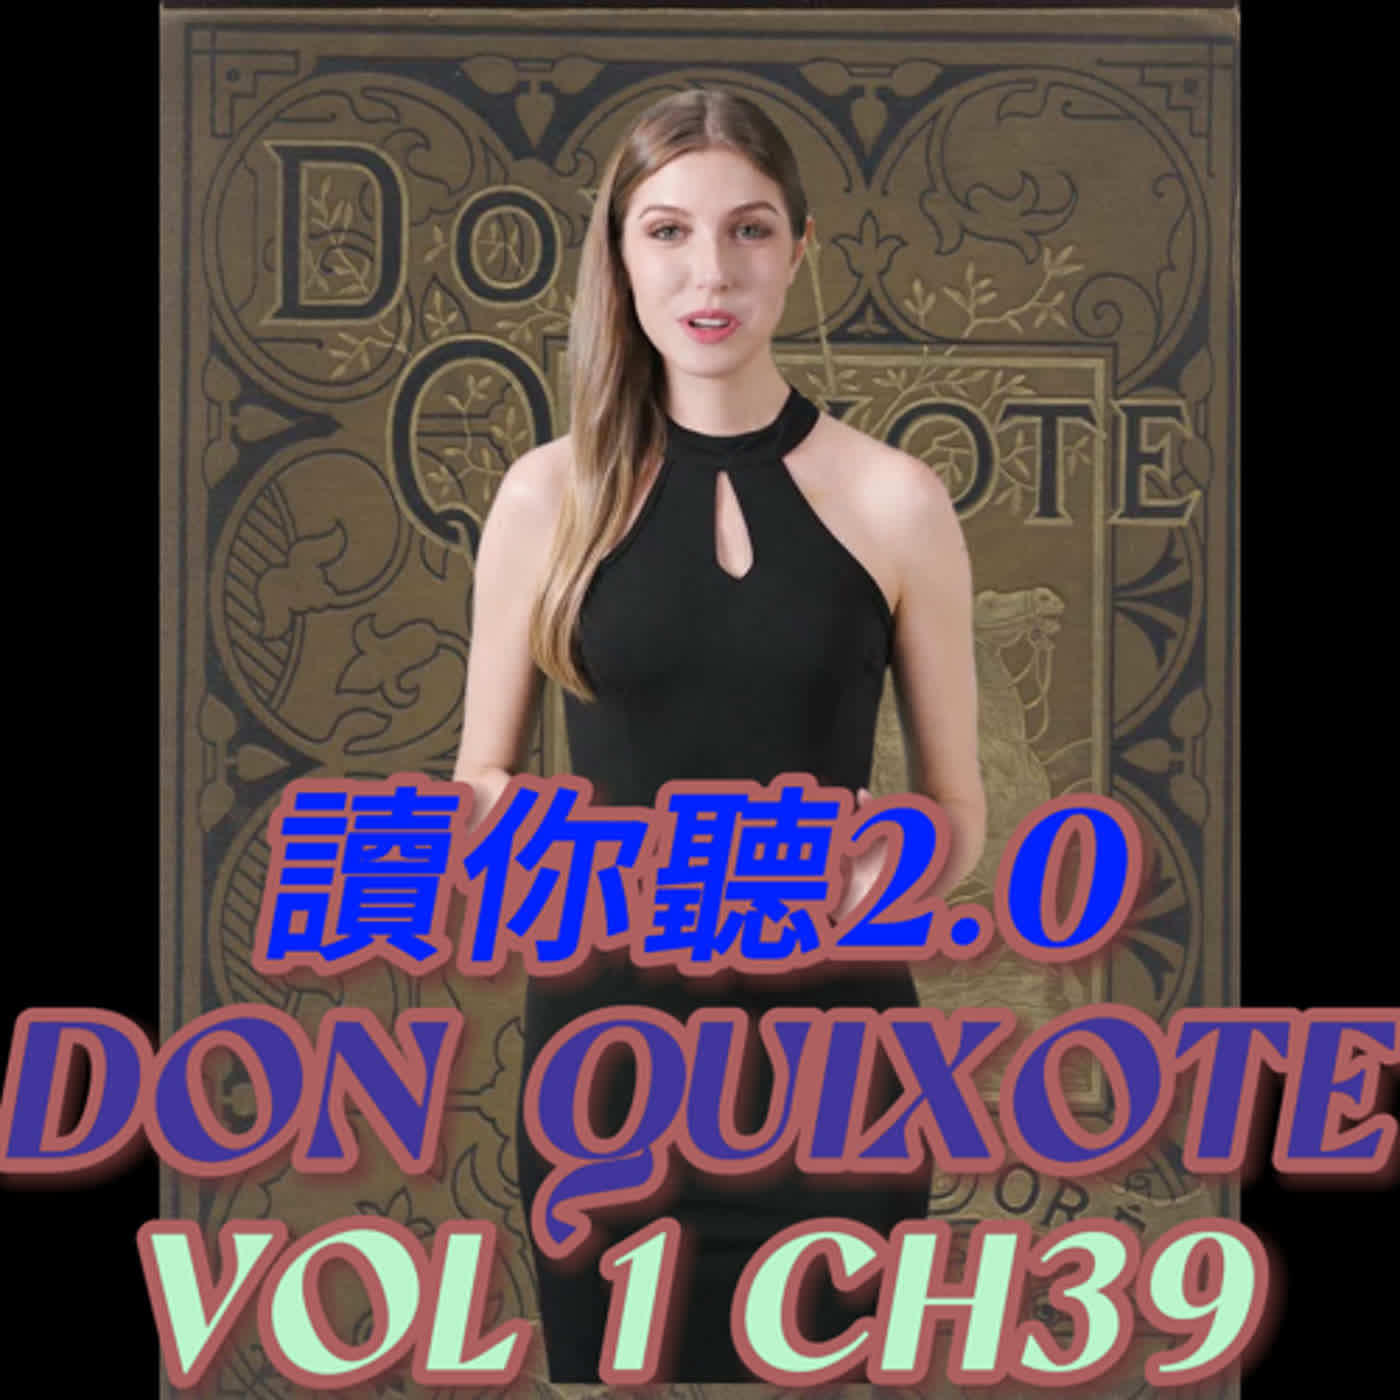 Costa's Audio Book: Miguel de Cervantes "Don Quixote" Volume 1 Chapter 39 讀你聽2.0《唐吉訶德》ft. MC Jessie